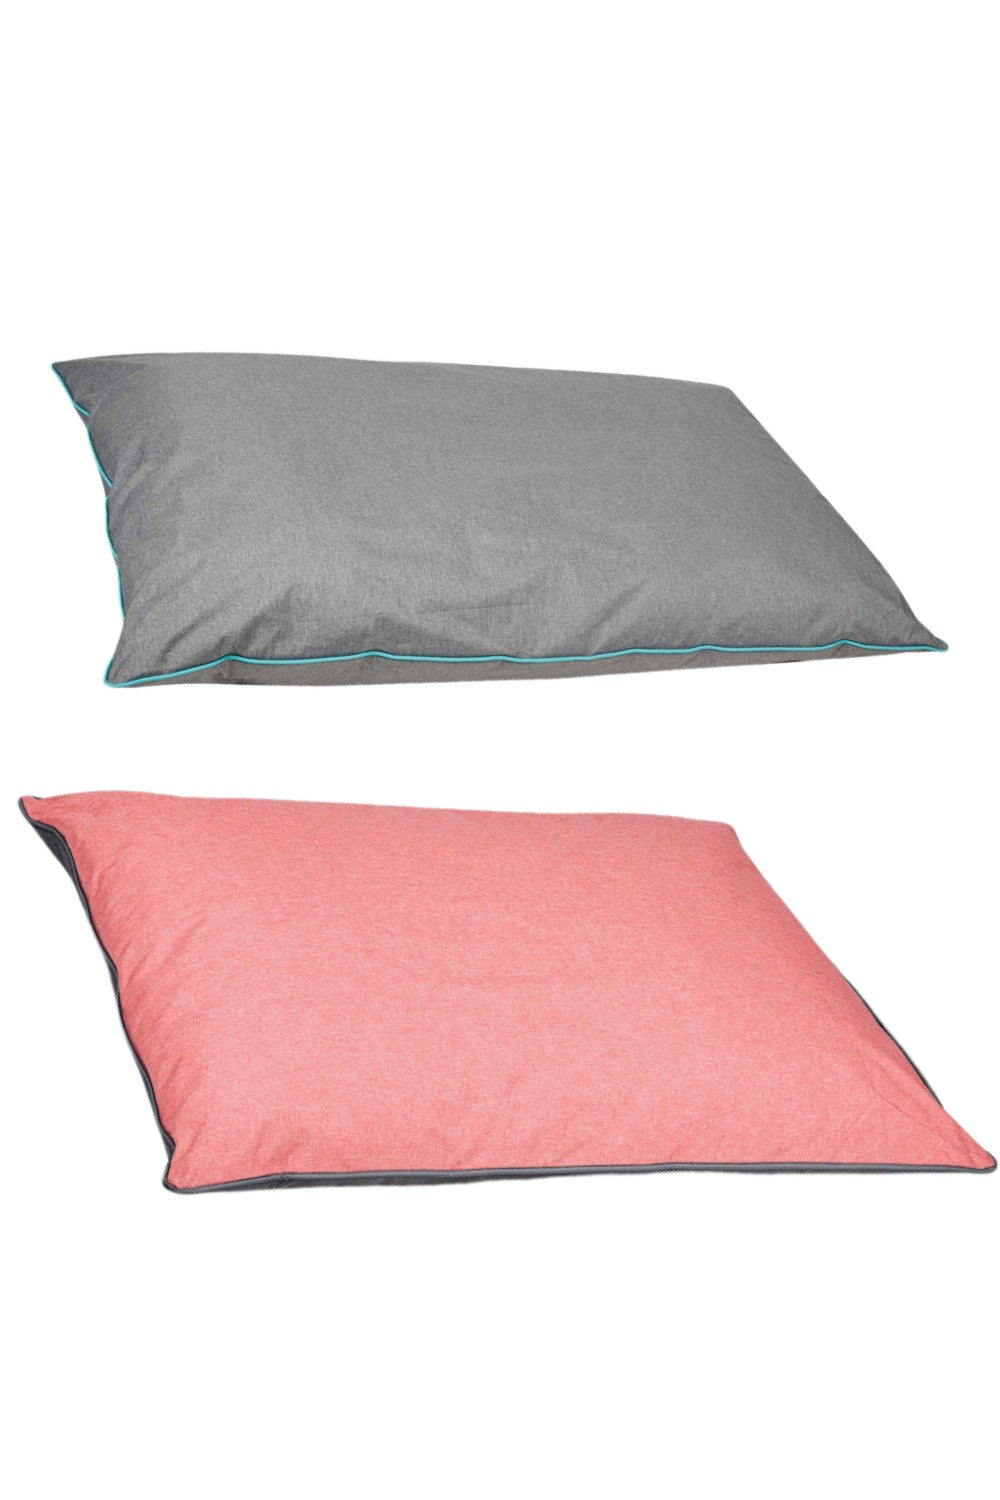 WeatherBeeta Waterproof Pillow Dog Bed In Grey/Turquoise, Grey/Pink